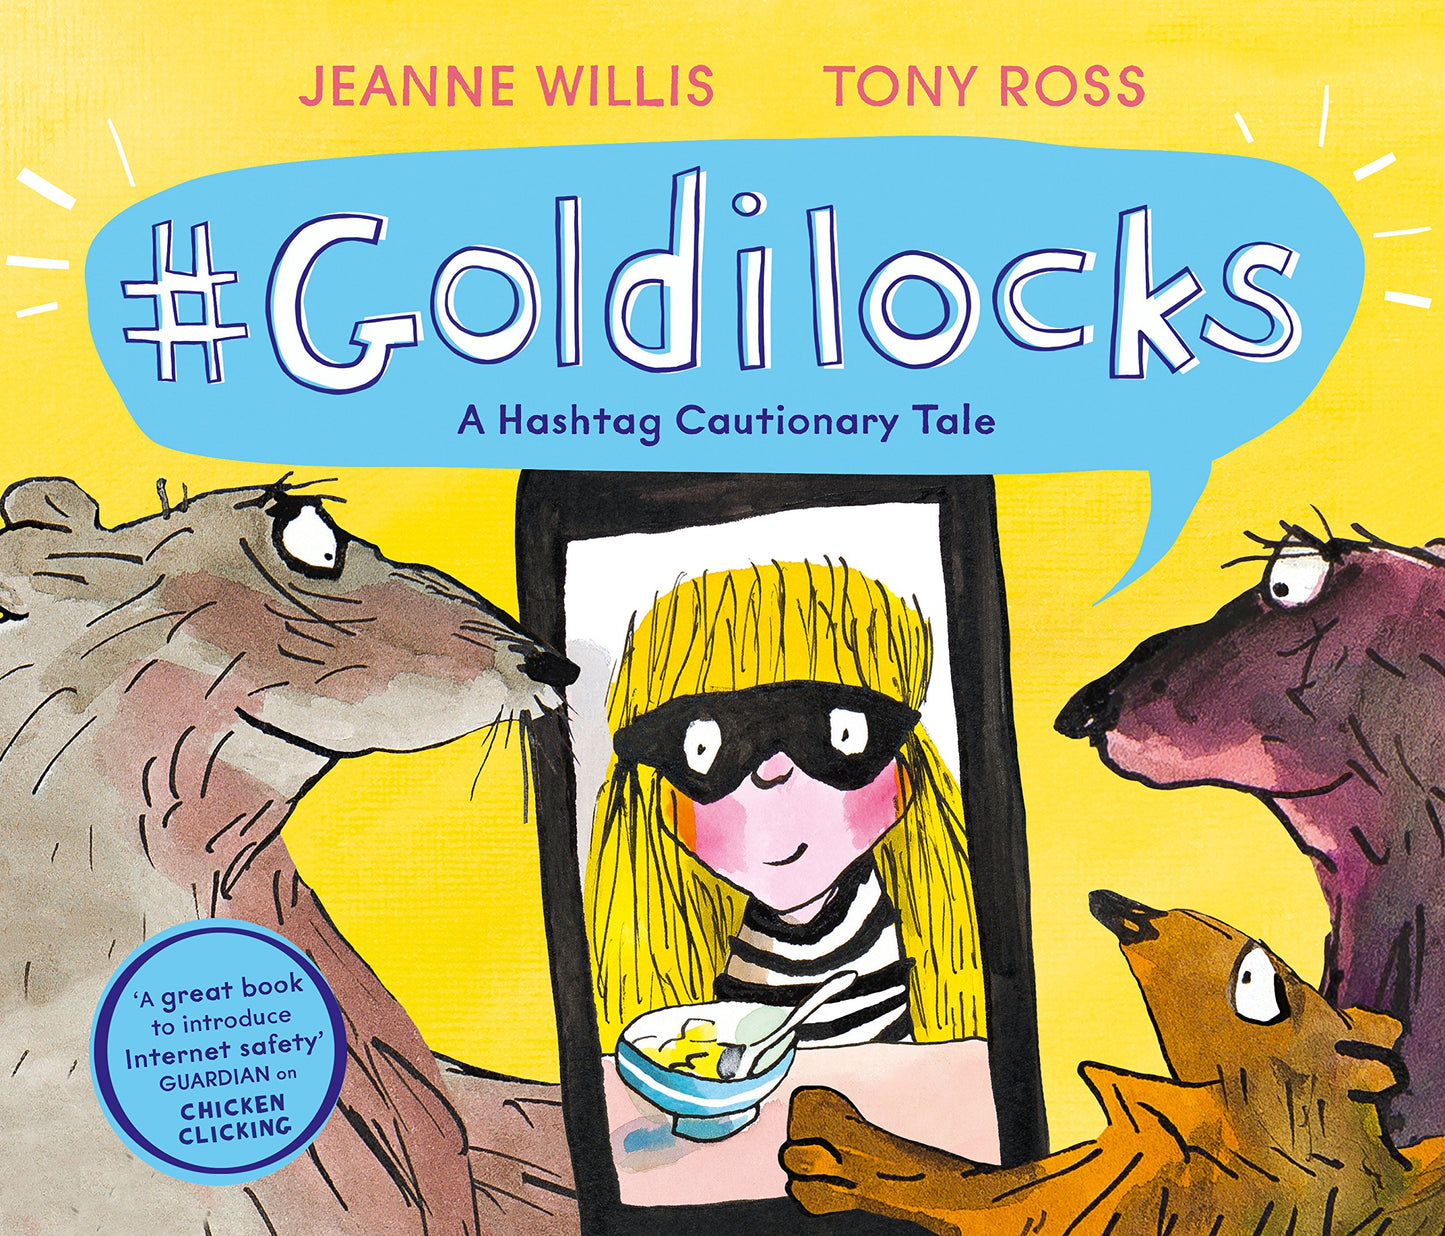 # Goldilocks  - A Hashtag Cautionary Tale by Jeanne Willis and Tony Ross